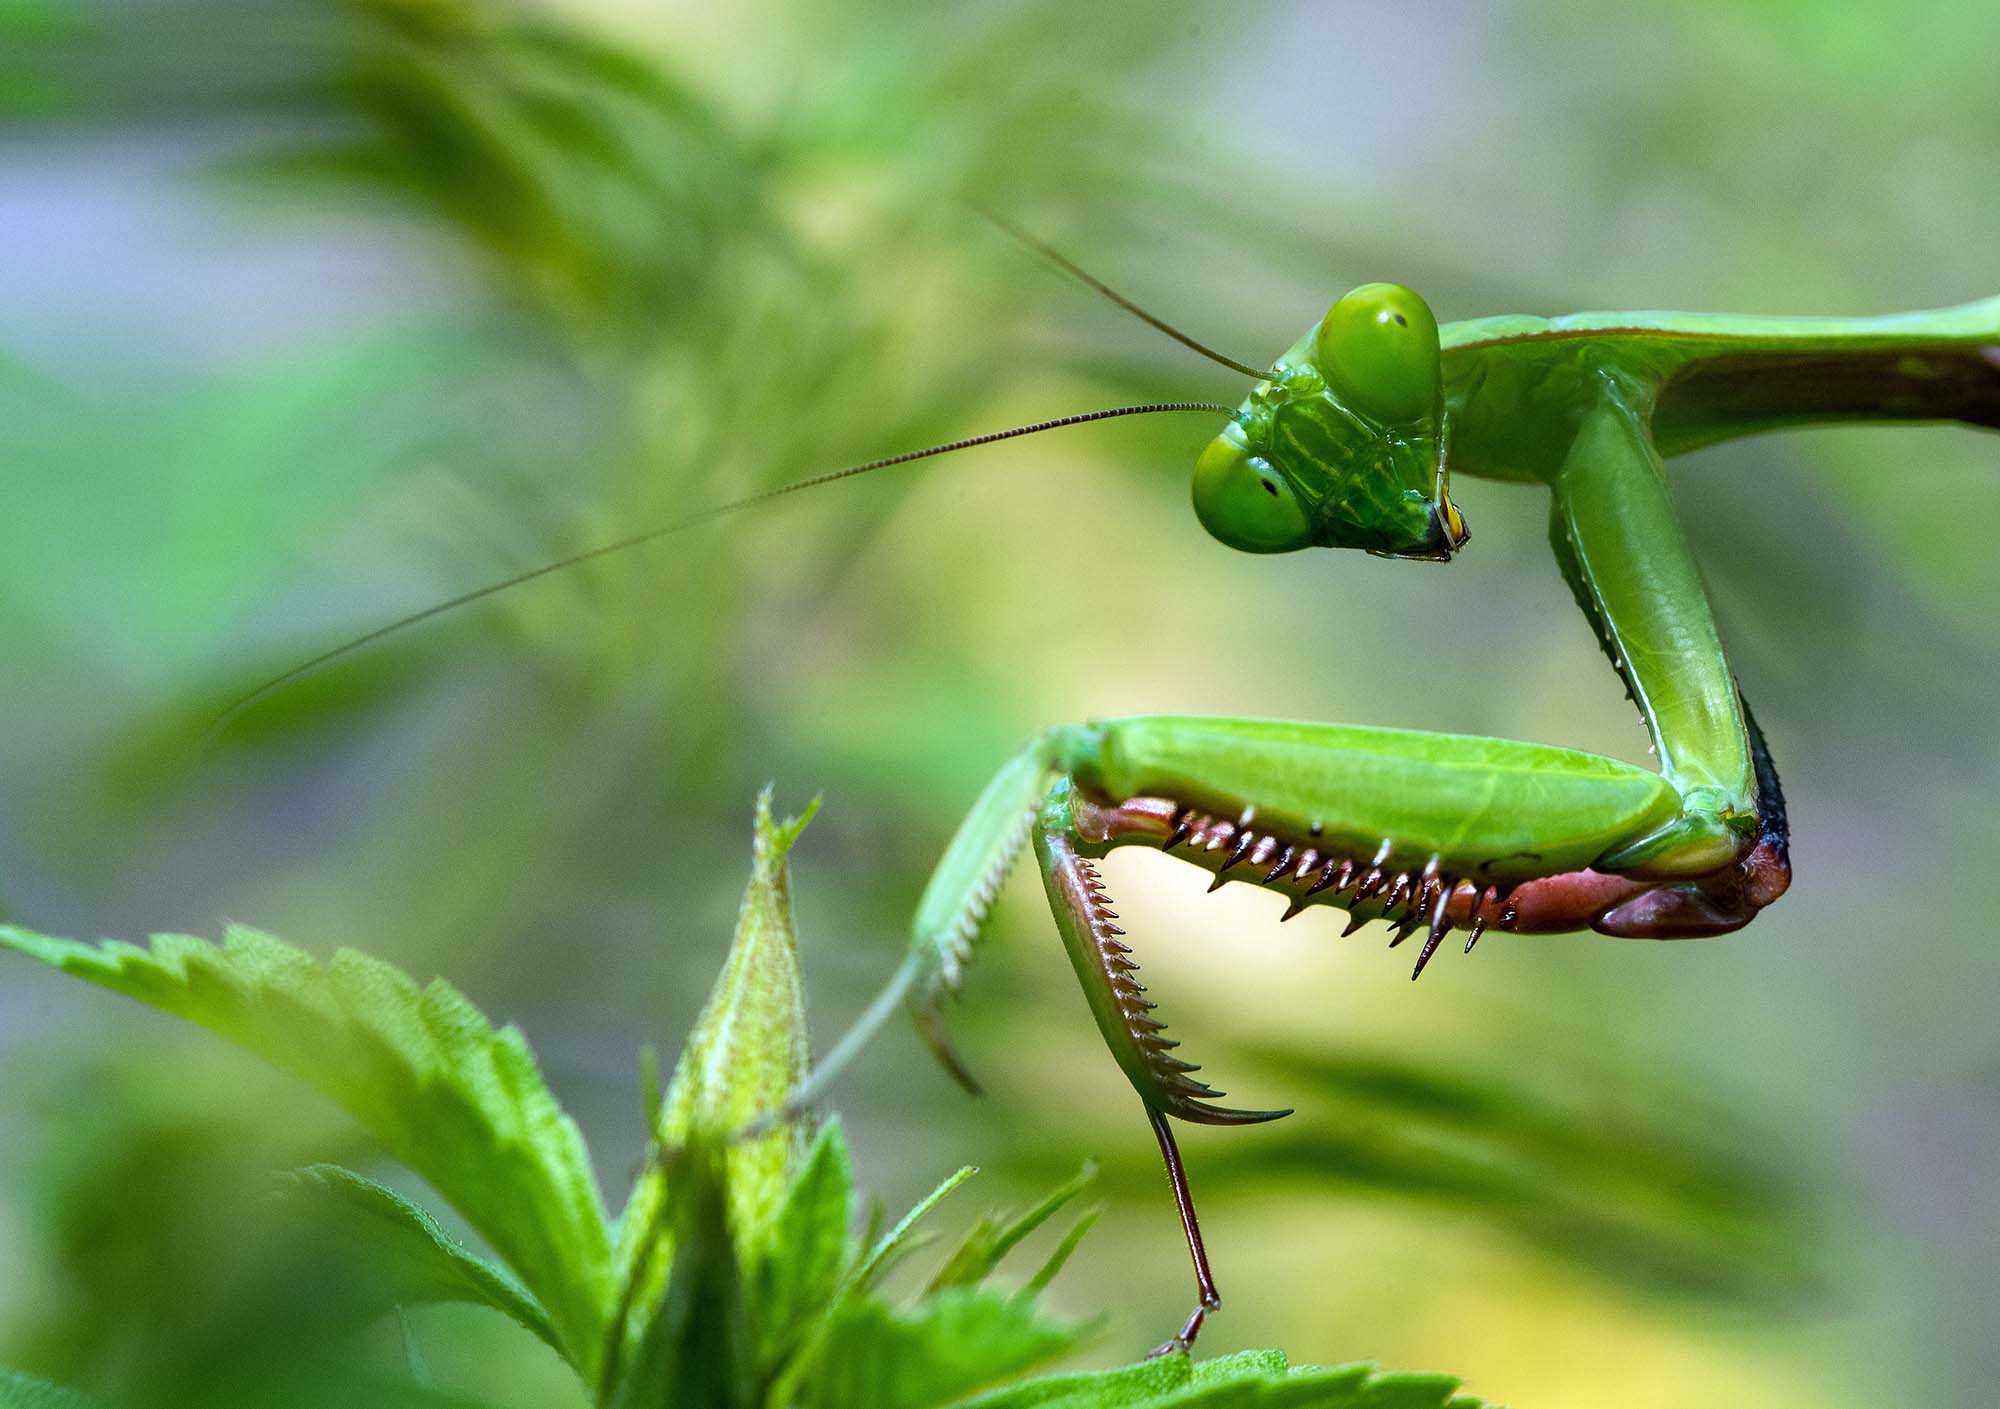 Photo: a bright green praying mantis seems to be looking at the camera